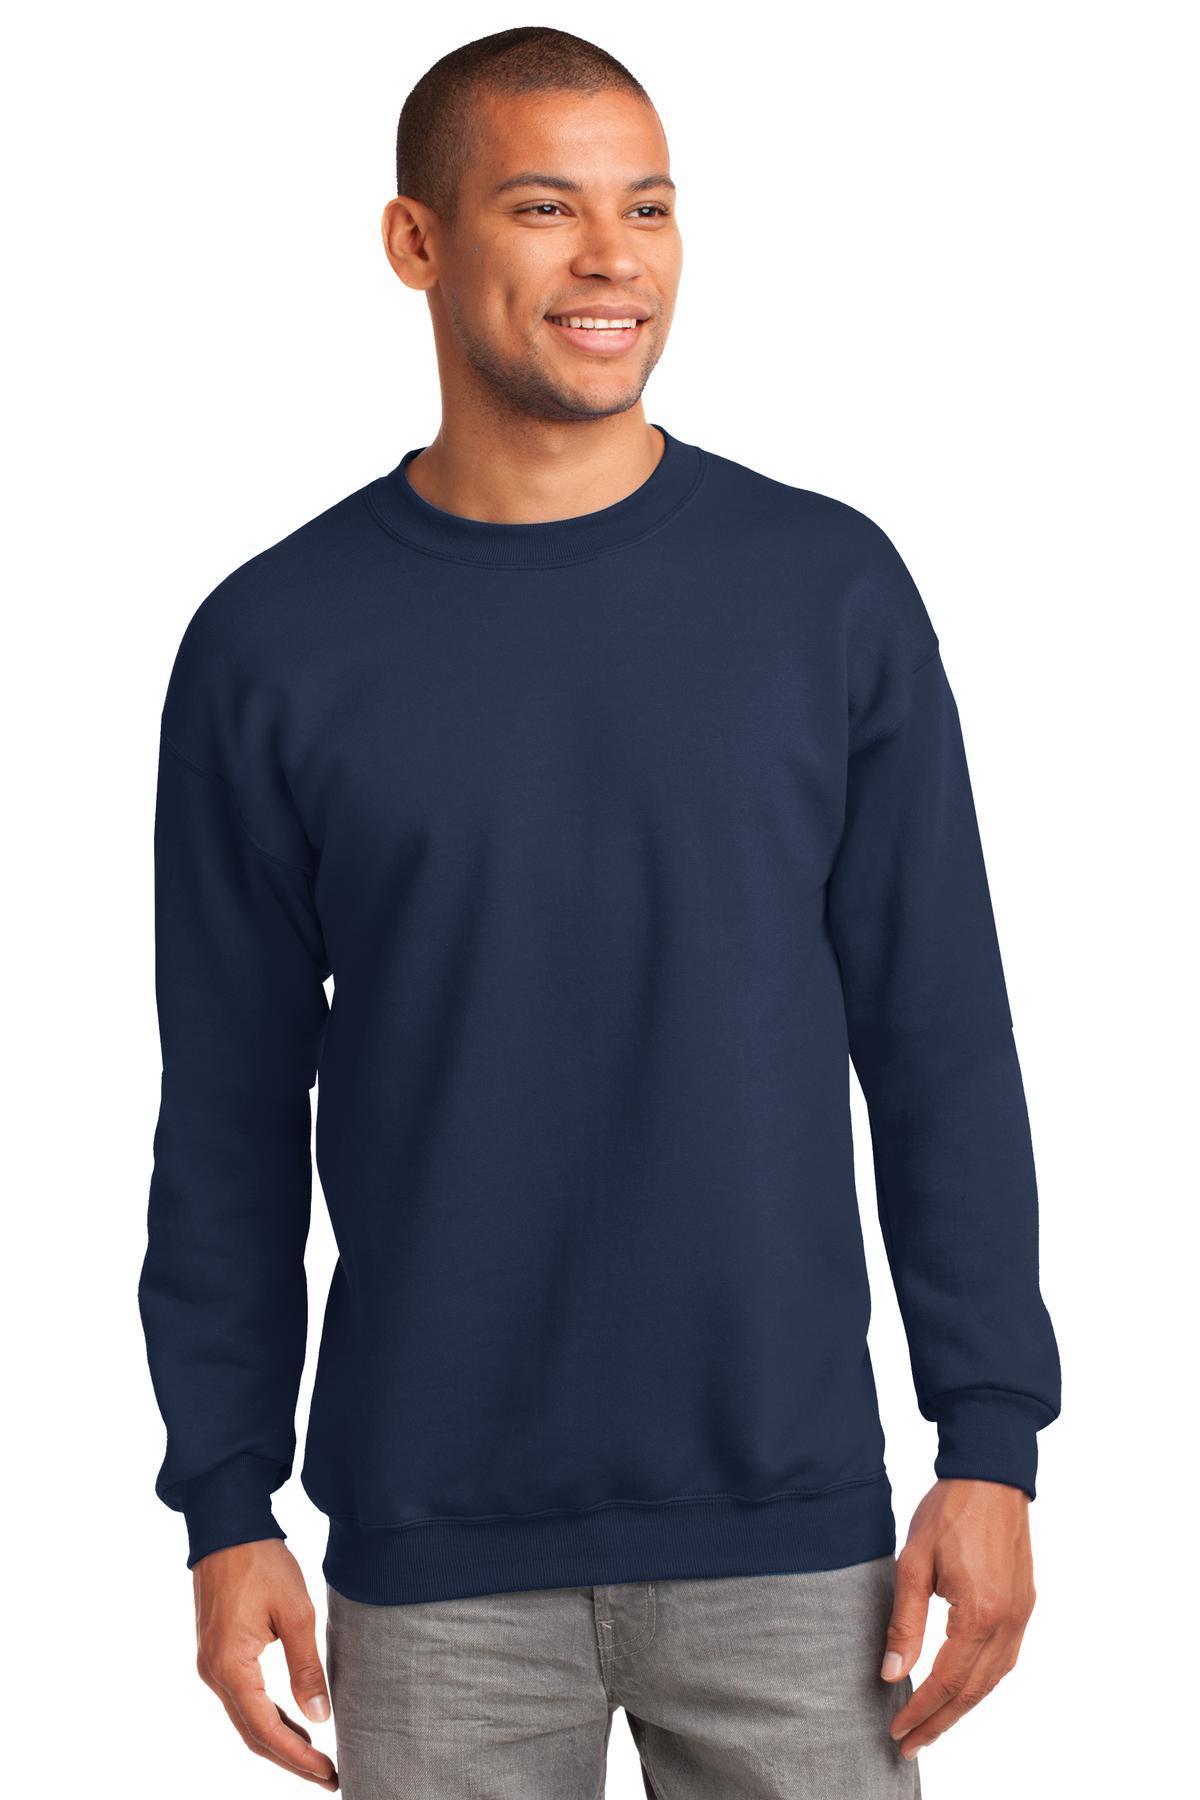 Port & Company Tall Essential Fleece Crewneck Sweatshirt. PC90T - Dresses Max